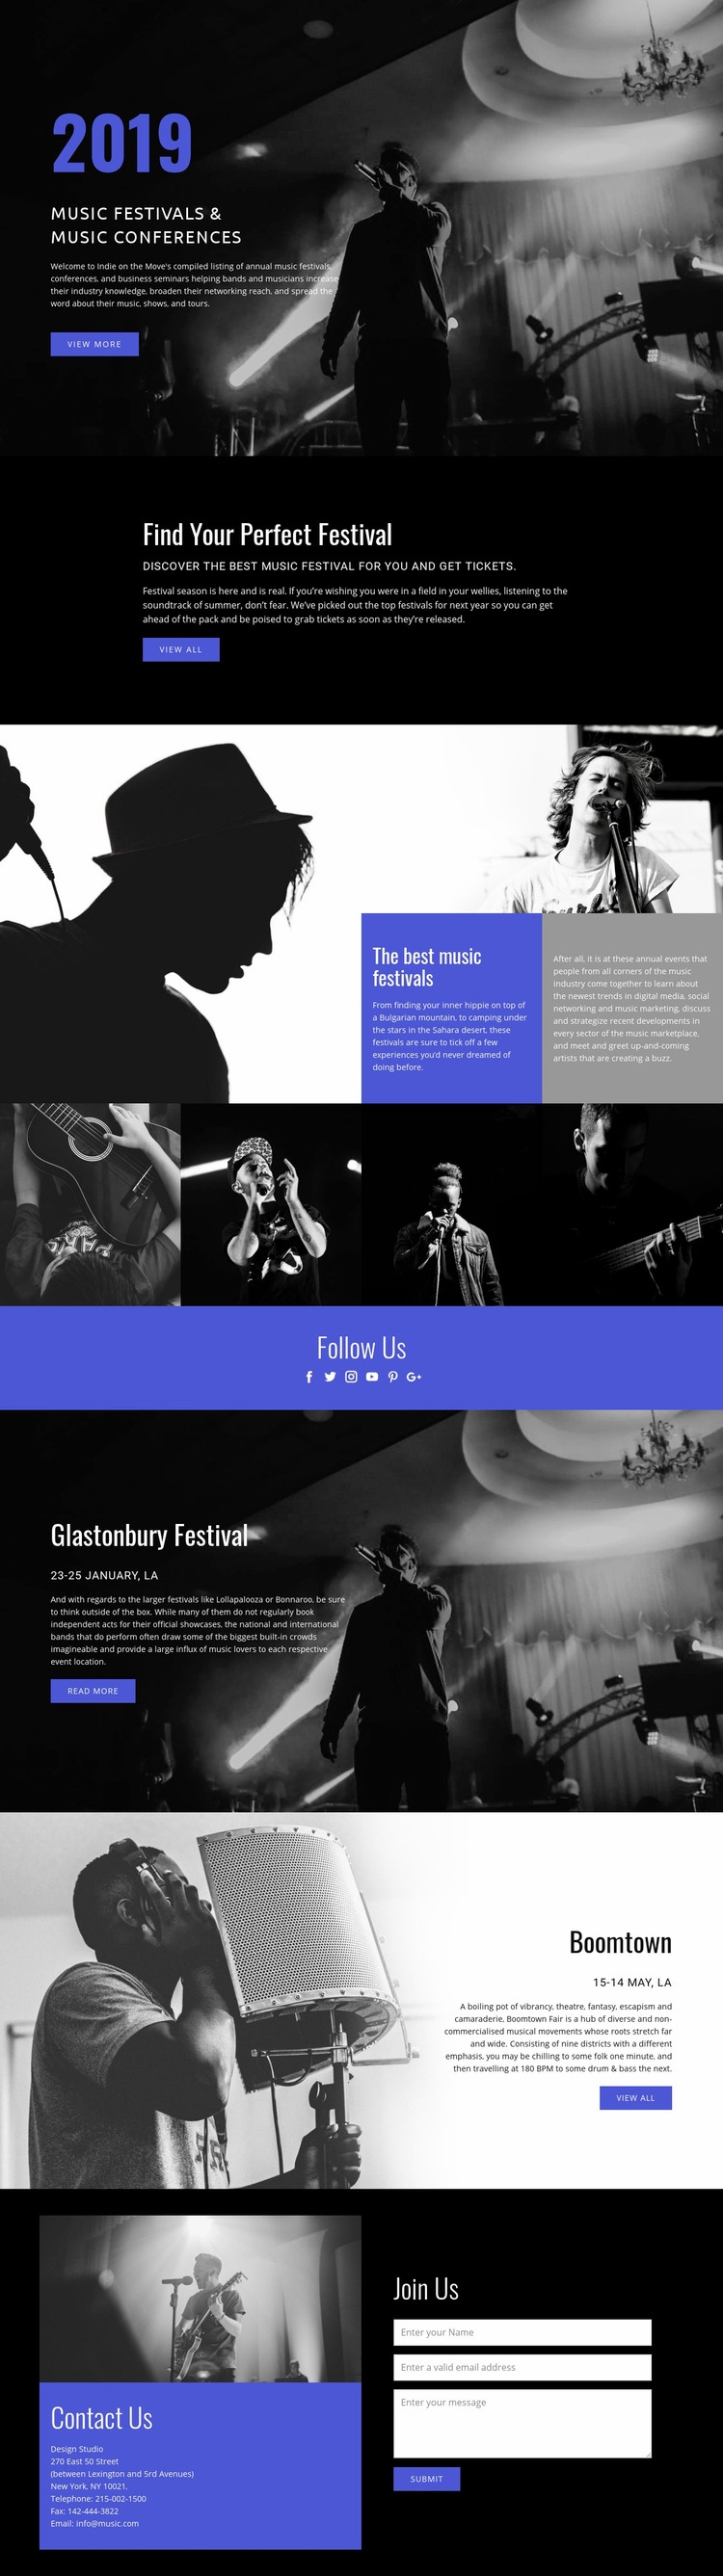 Music Festivals Web Page Design